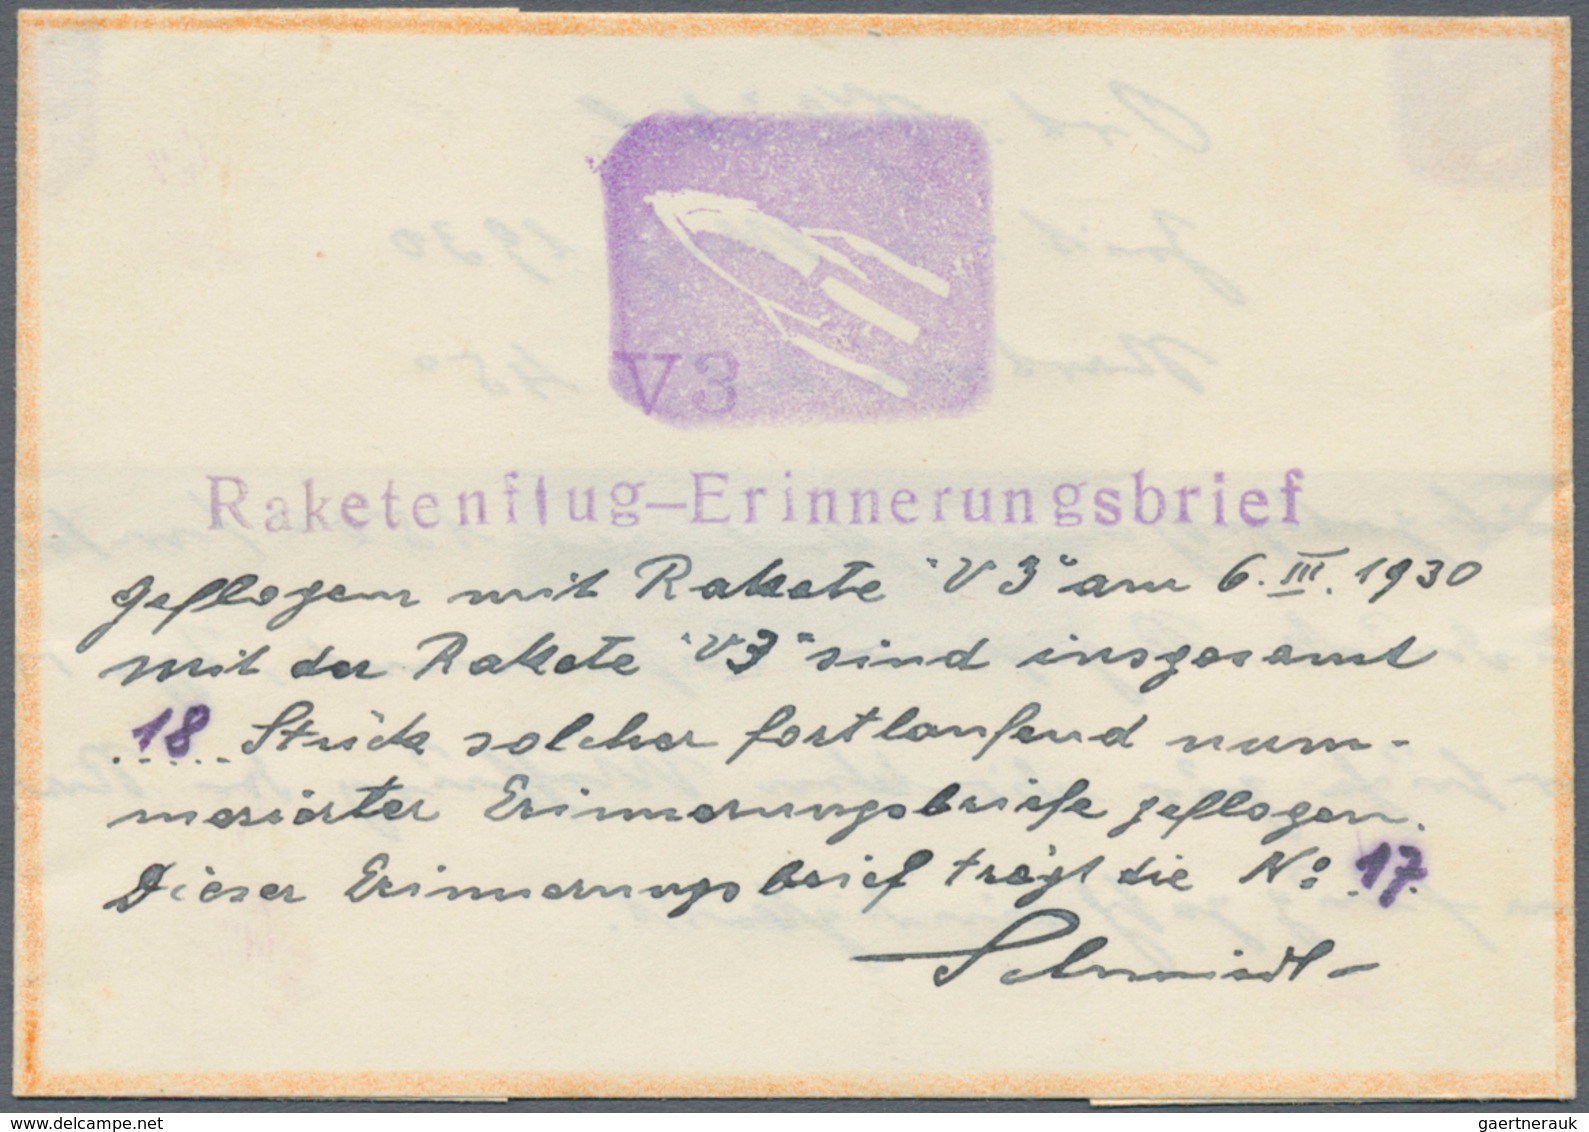 Raketenpost: Friedrich Schmiedl was born on 14.05.1902 in Schwertberg in Upper Austria. At the age o